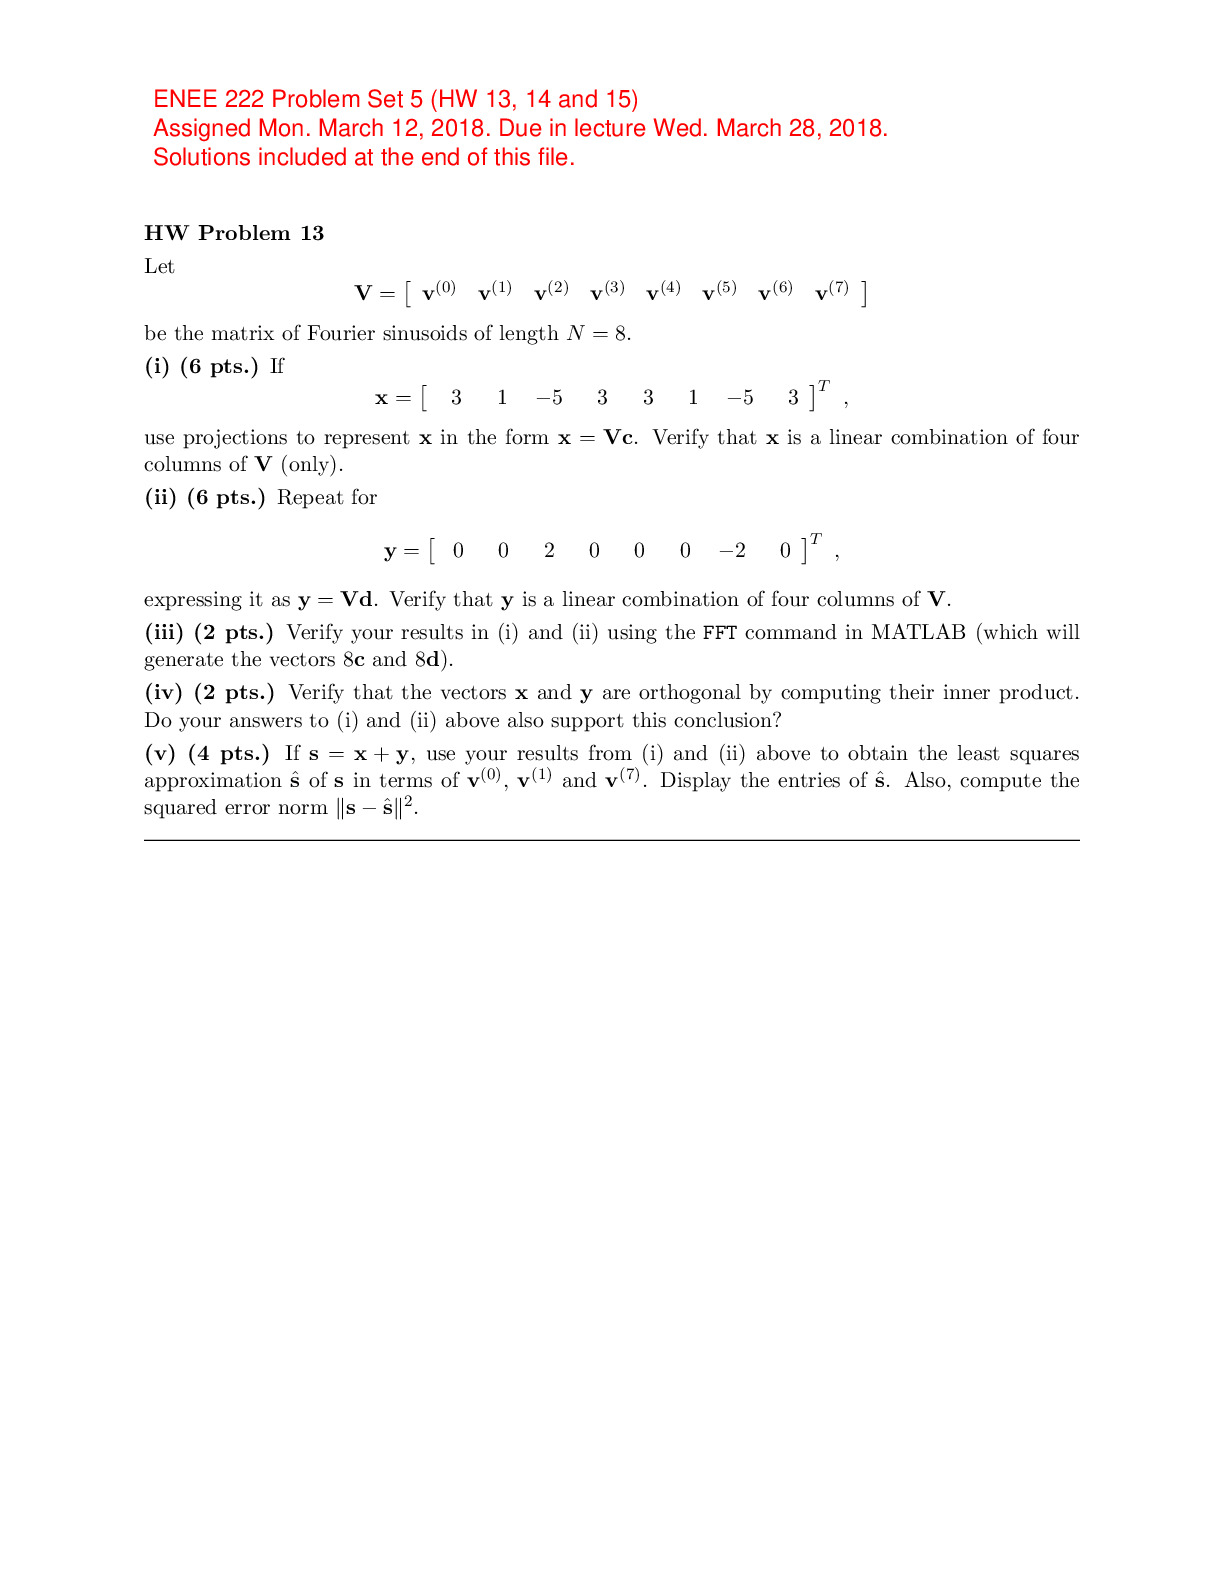 ENEE222_Problem_Set_5___Solutions_HW_13_14_15.pdf